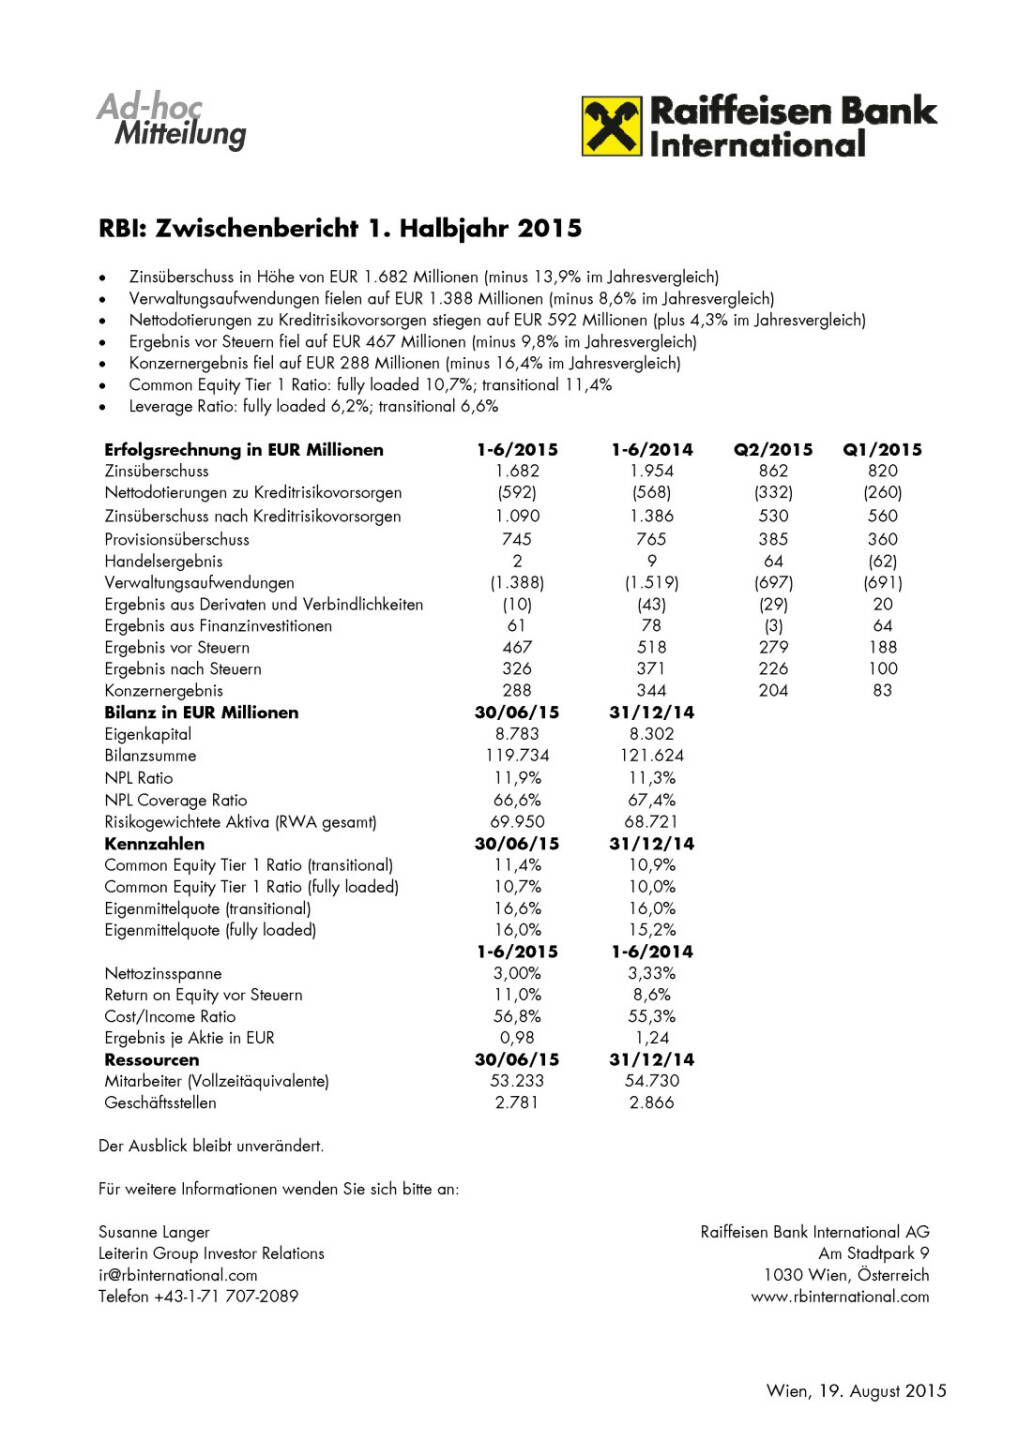 RBI: Zwischenbericht H1 2015, Seite 1/1, komplettes Dokument unter http://boerse-social.com/static/uploads/file_298_rbi_zwischenbericht_h1_2015.pdf